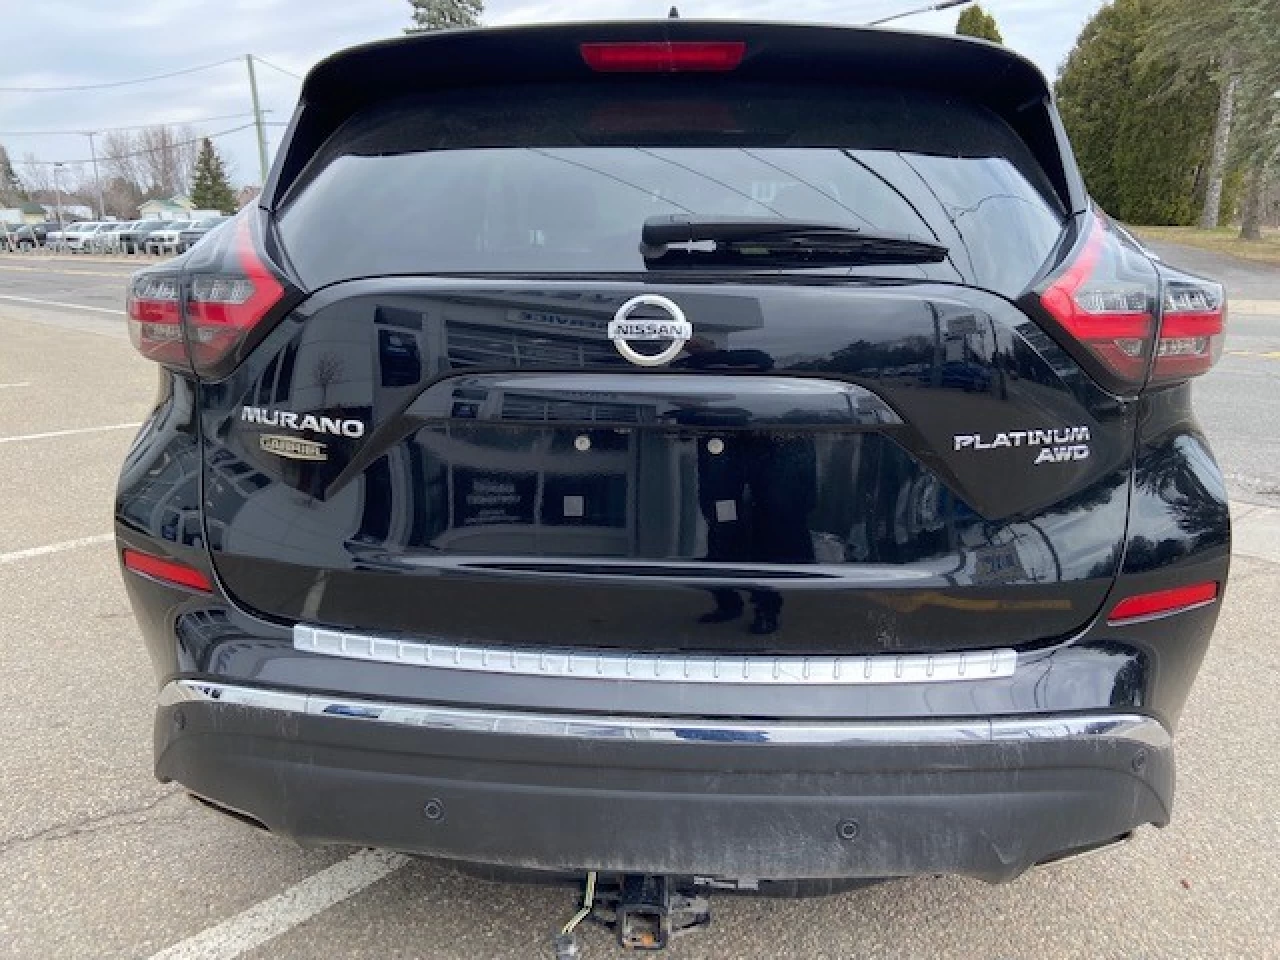 2019 Nissan Murano Platinum http://www.st-norbertford.com/resize/b990ff35b810a3abc0cc817b2ca24889-1